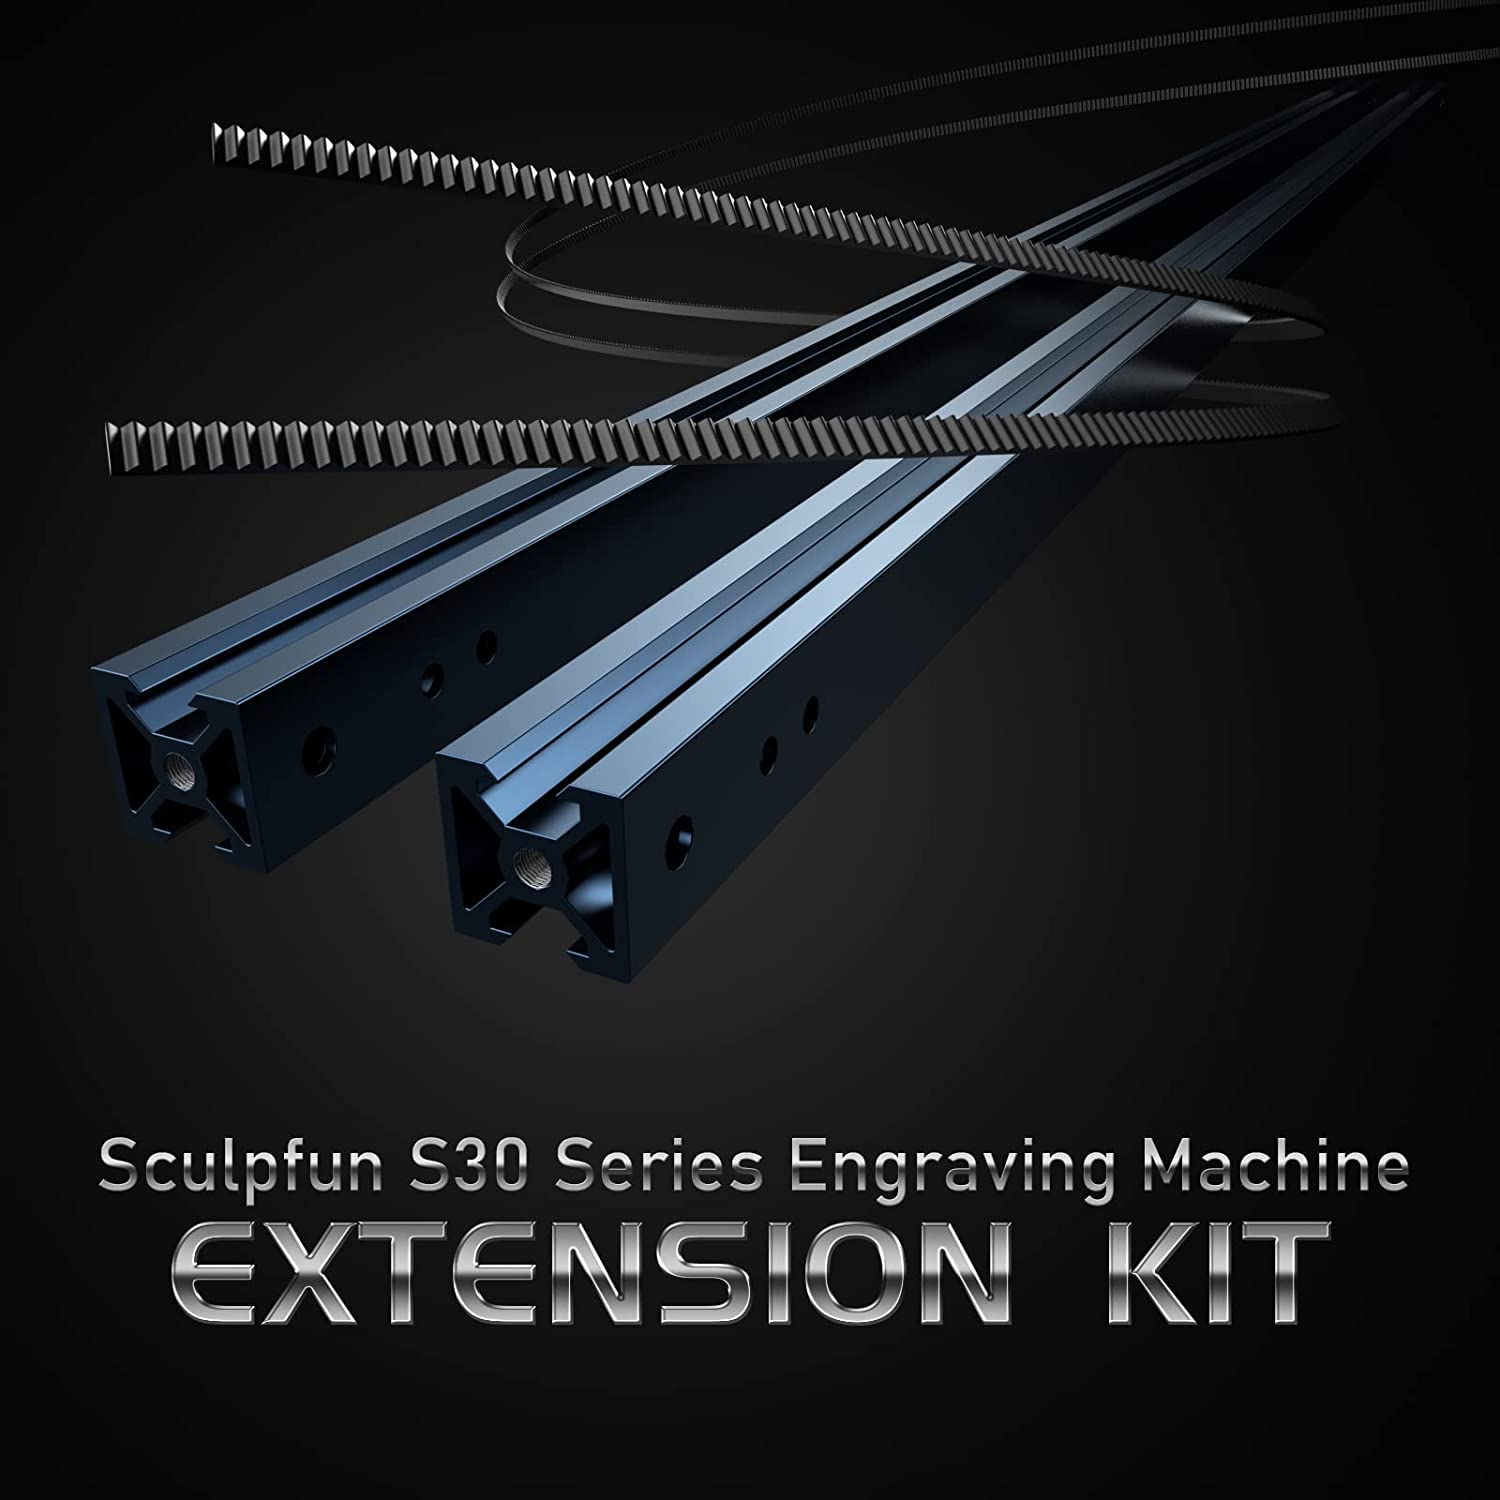 S30 Series Extension Kit